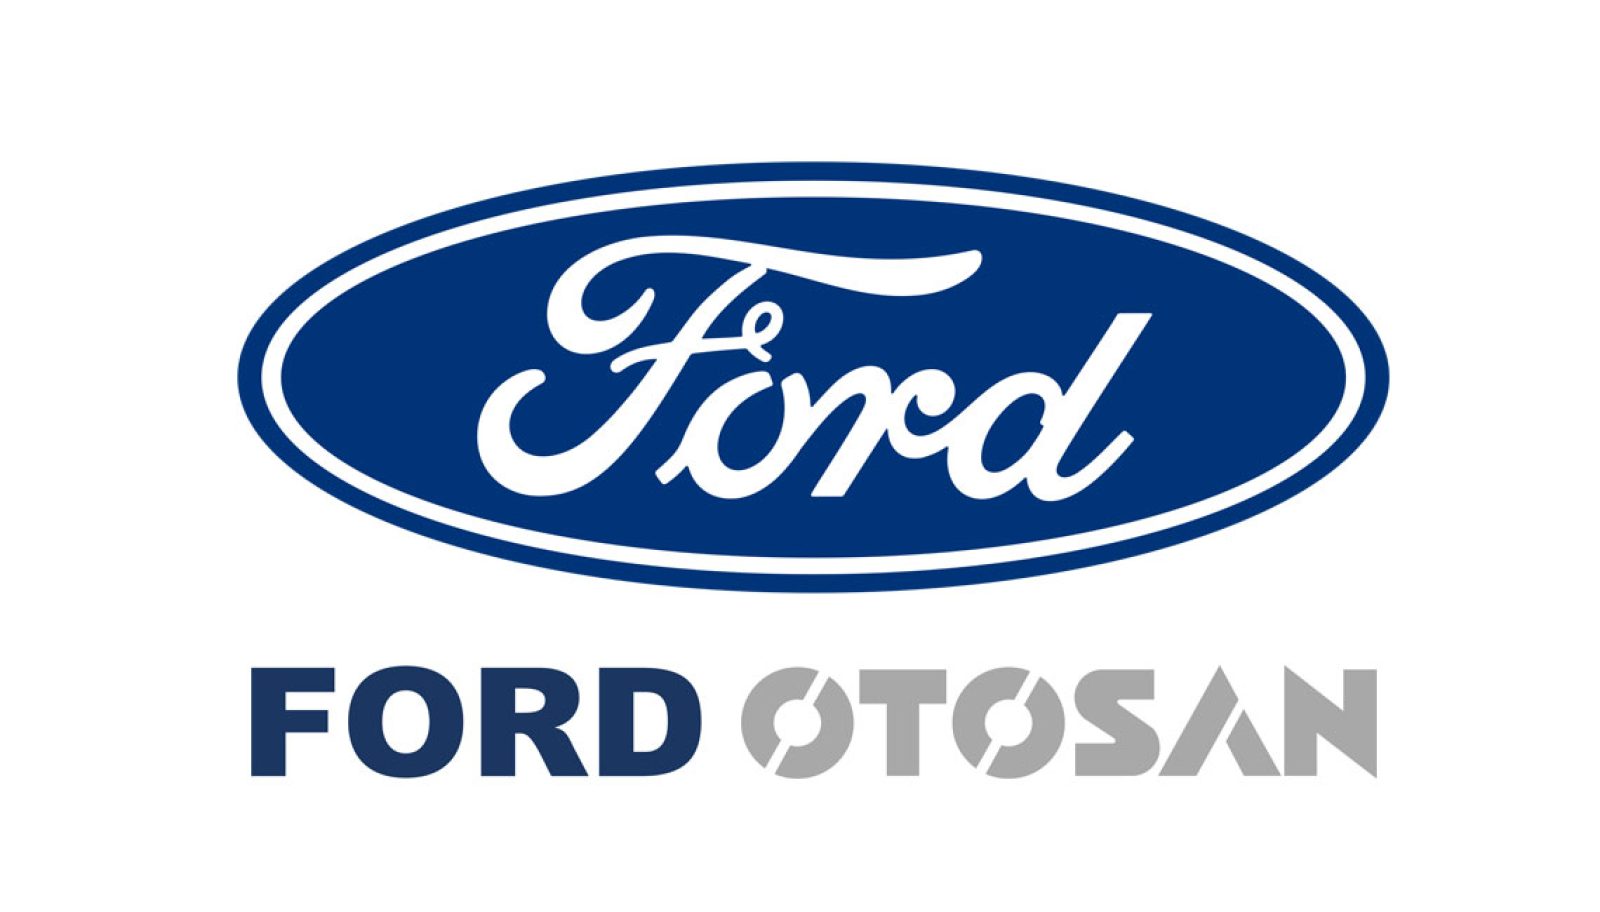 Ford Otosan